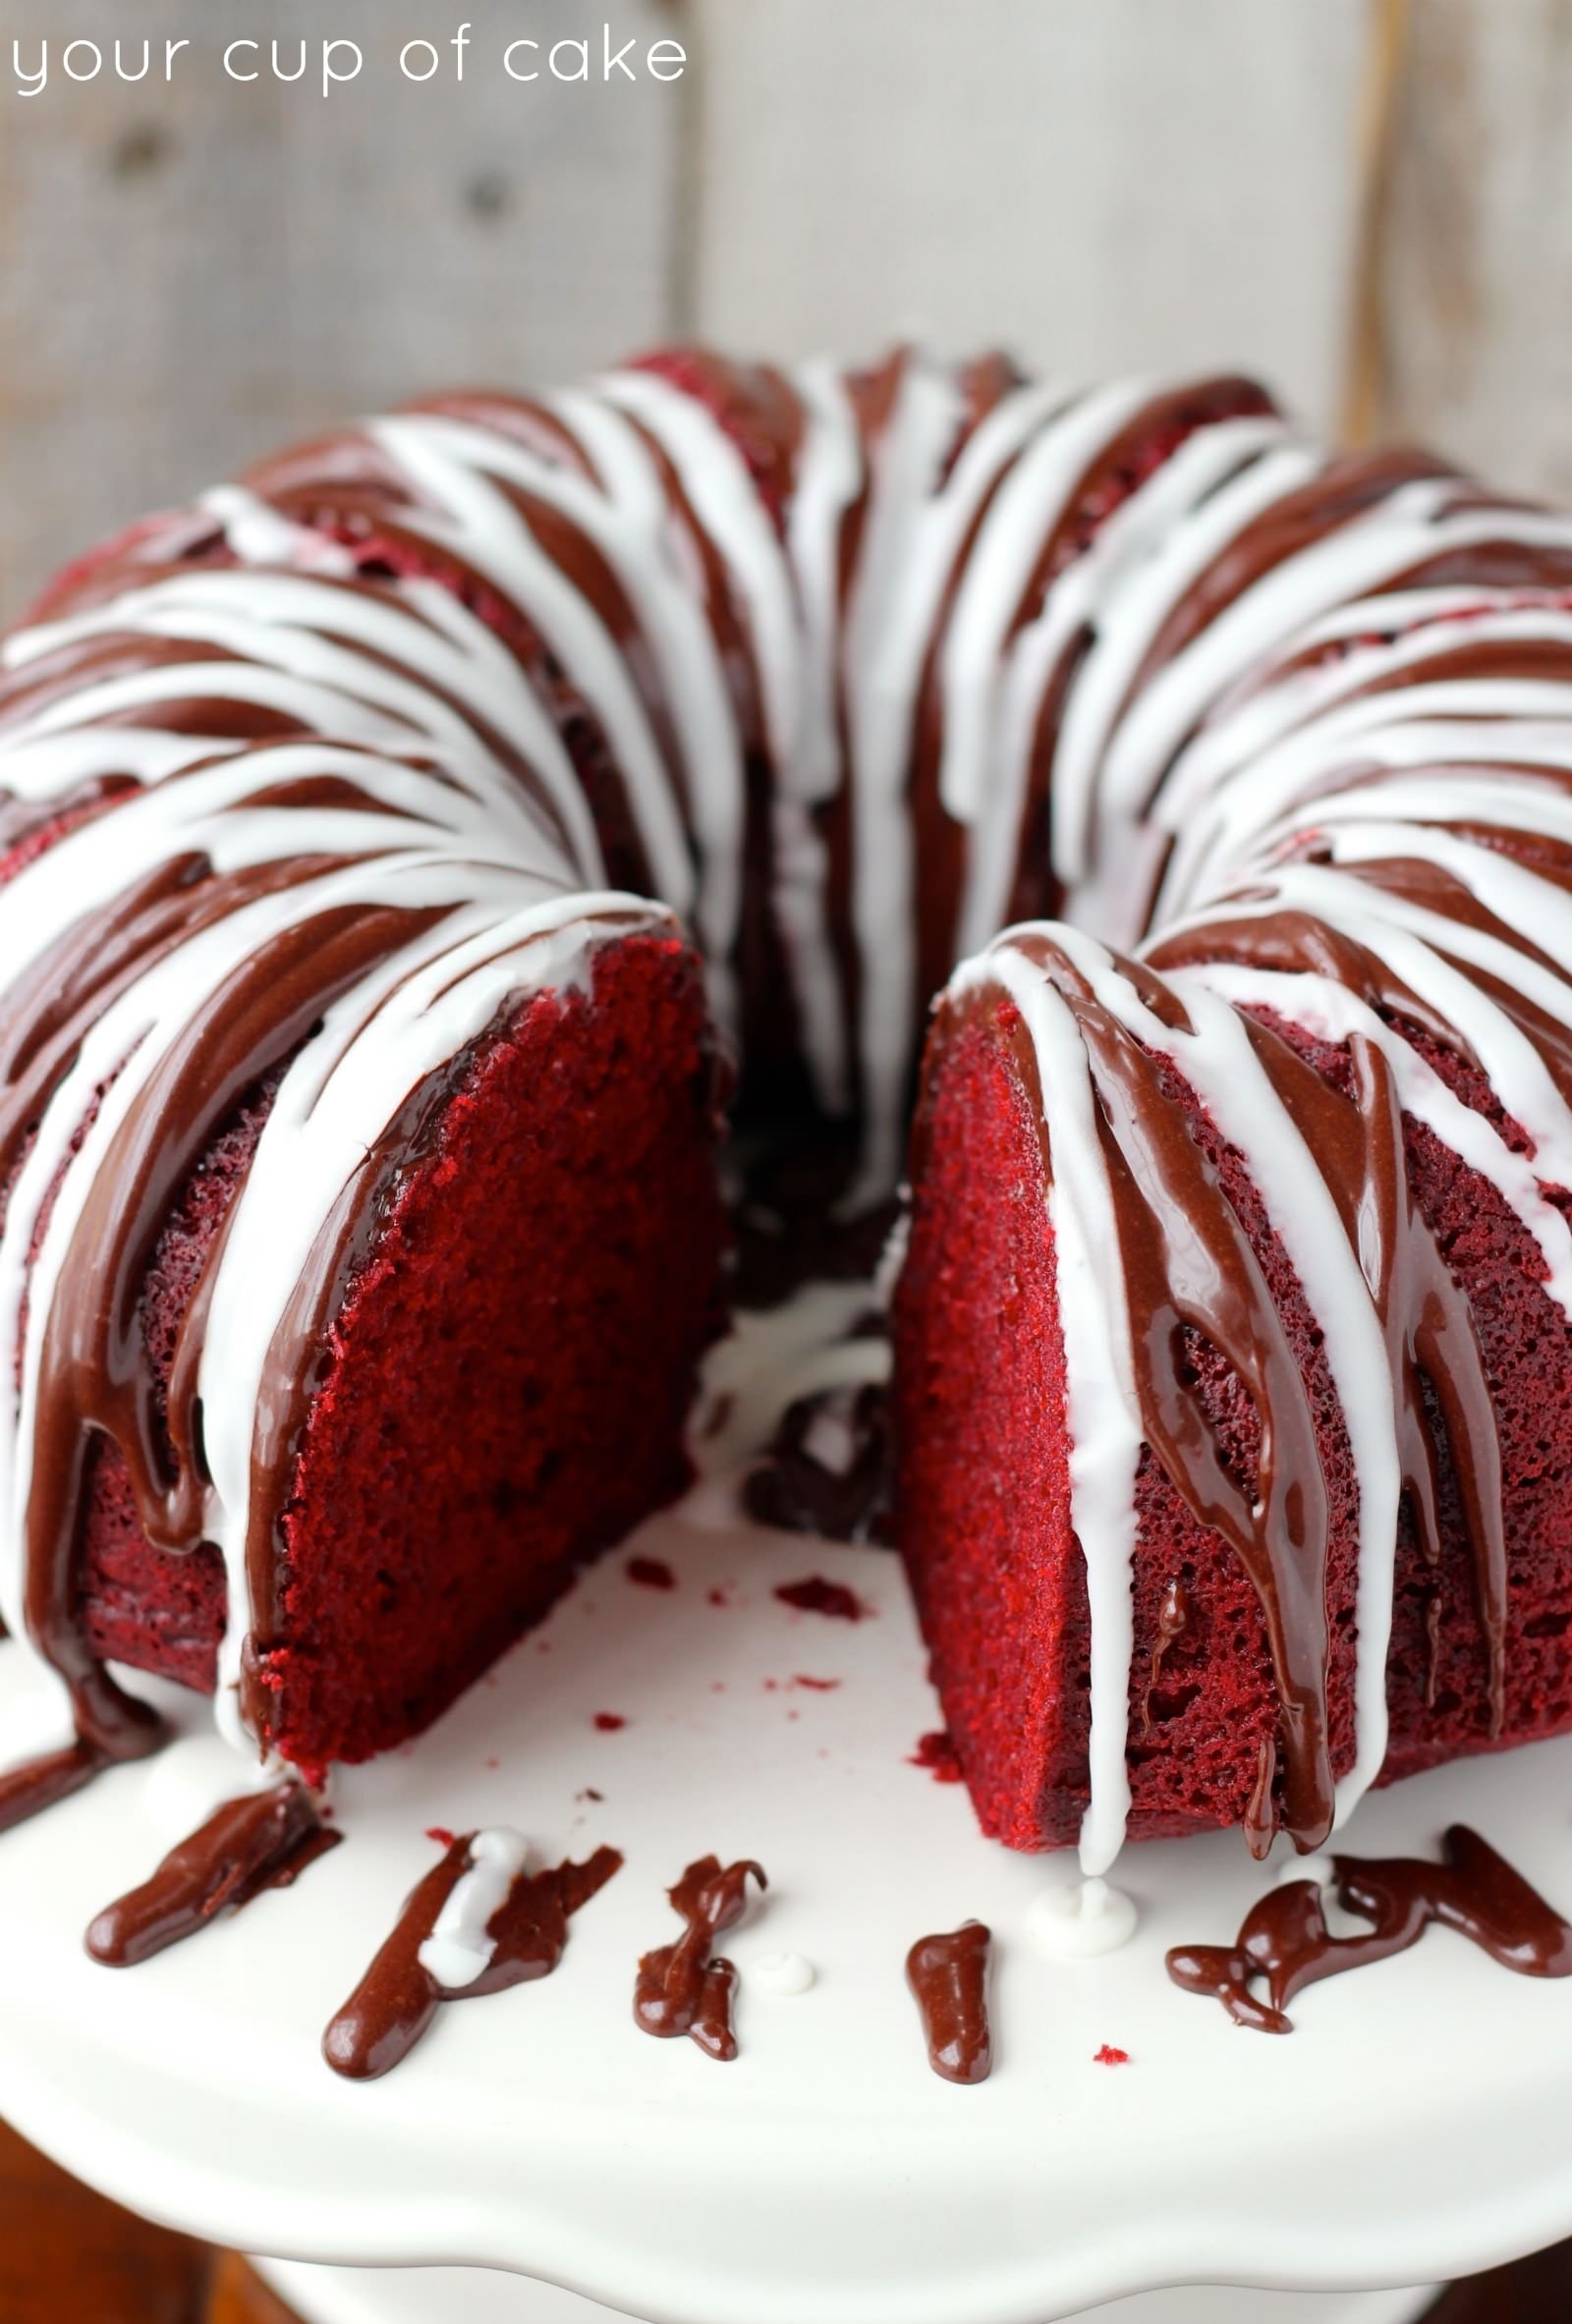 10 Pretty Red Velvet Cake Mix Recipe Ideas red velvet sour cream bundt cake your cup of cake 2022